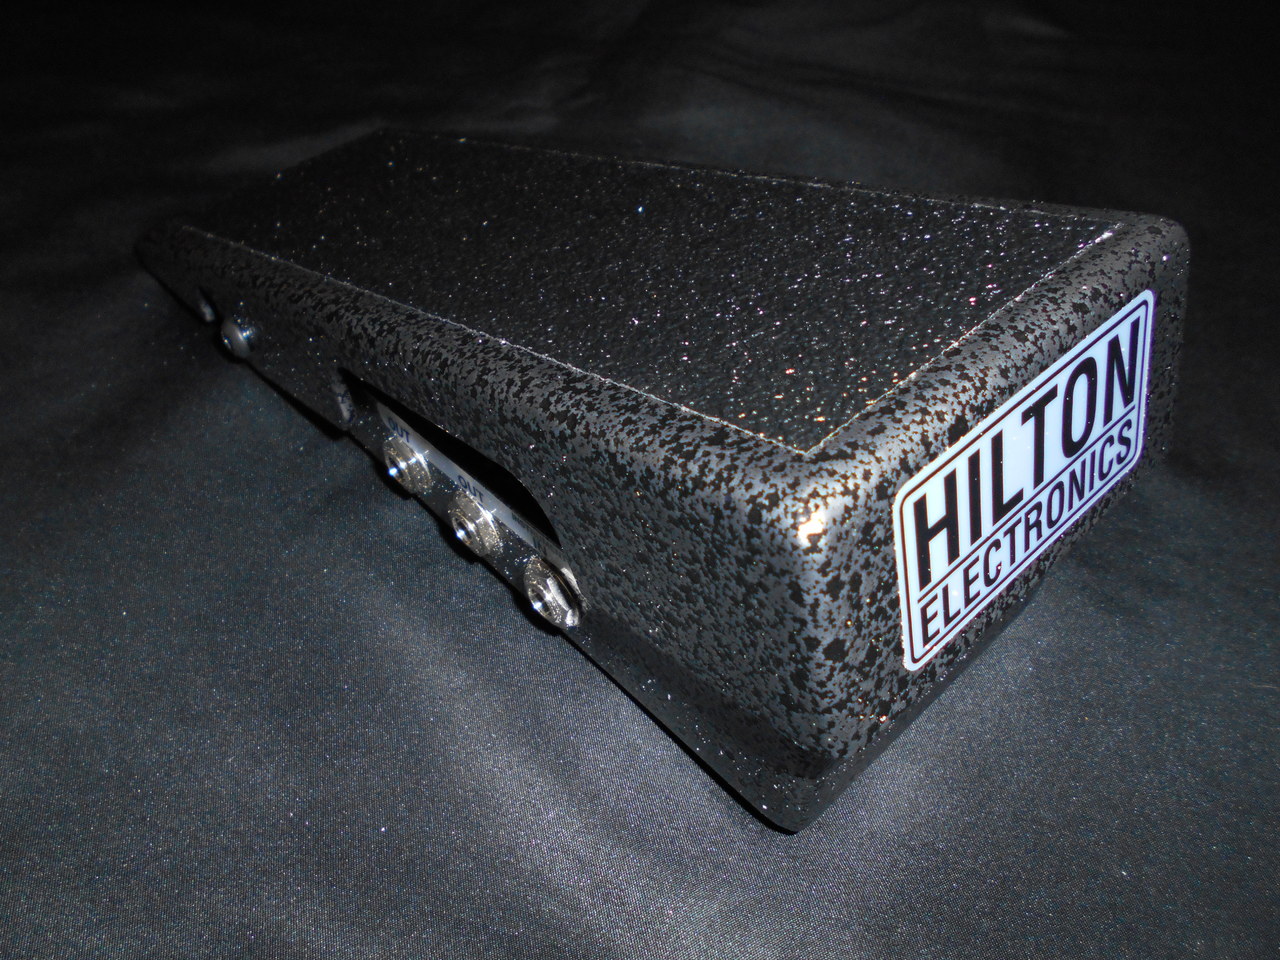 Hilton electronics pro guitar pedal